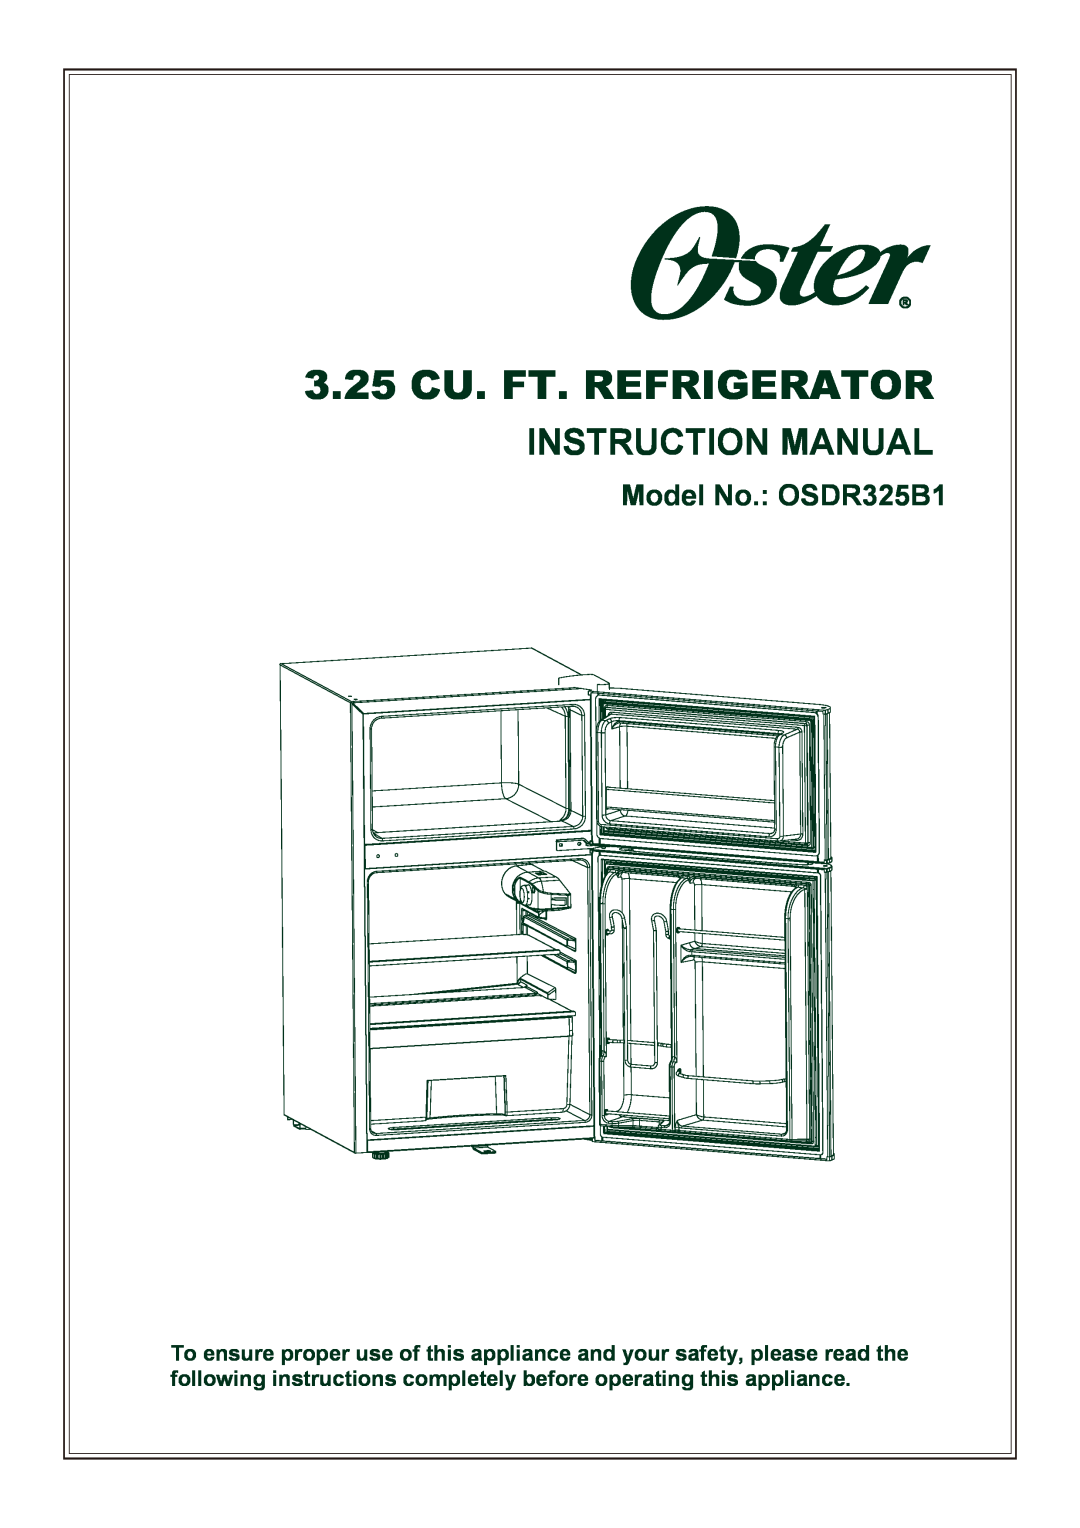 Oster Oster 3.25 CU. FT. Refrigerator instruction manual 3.25 CU. FT. REFRIGERATOR, Model No. OSDR325B1 